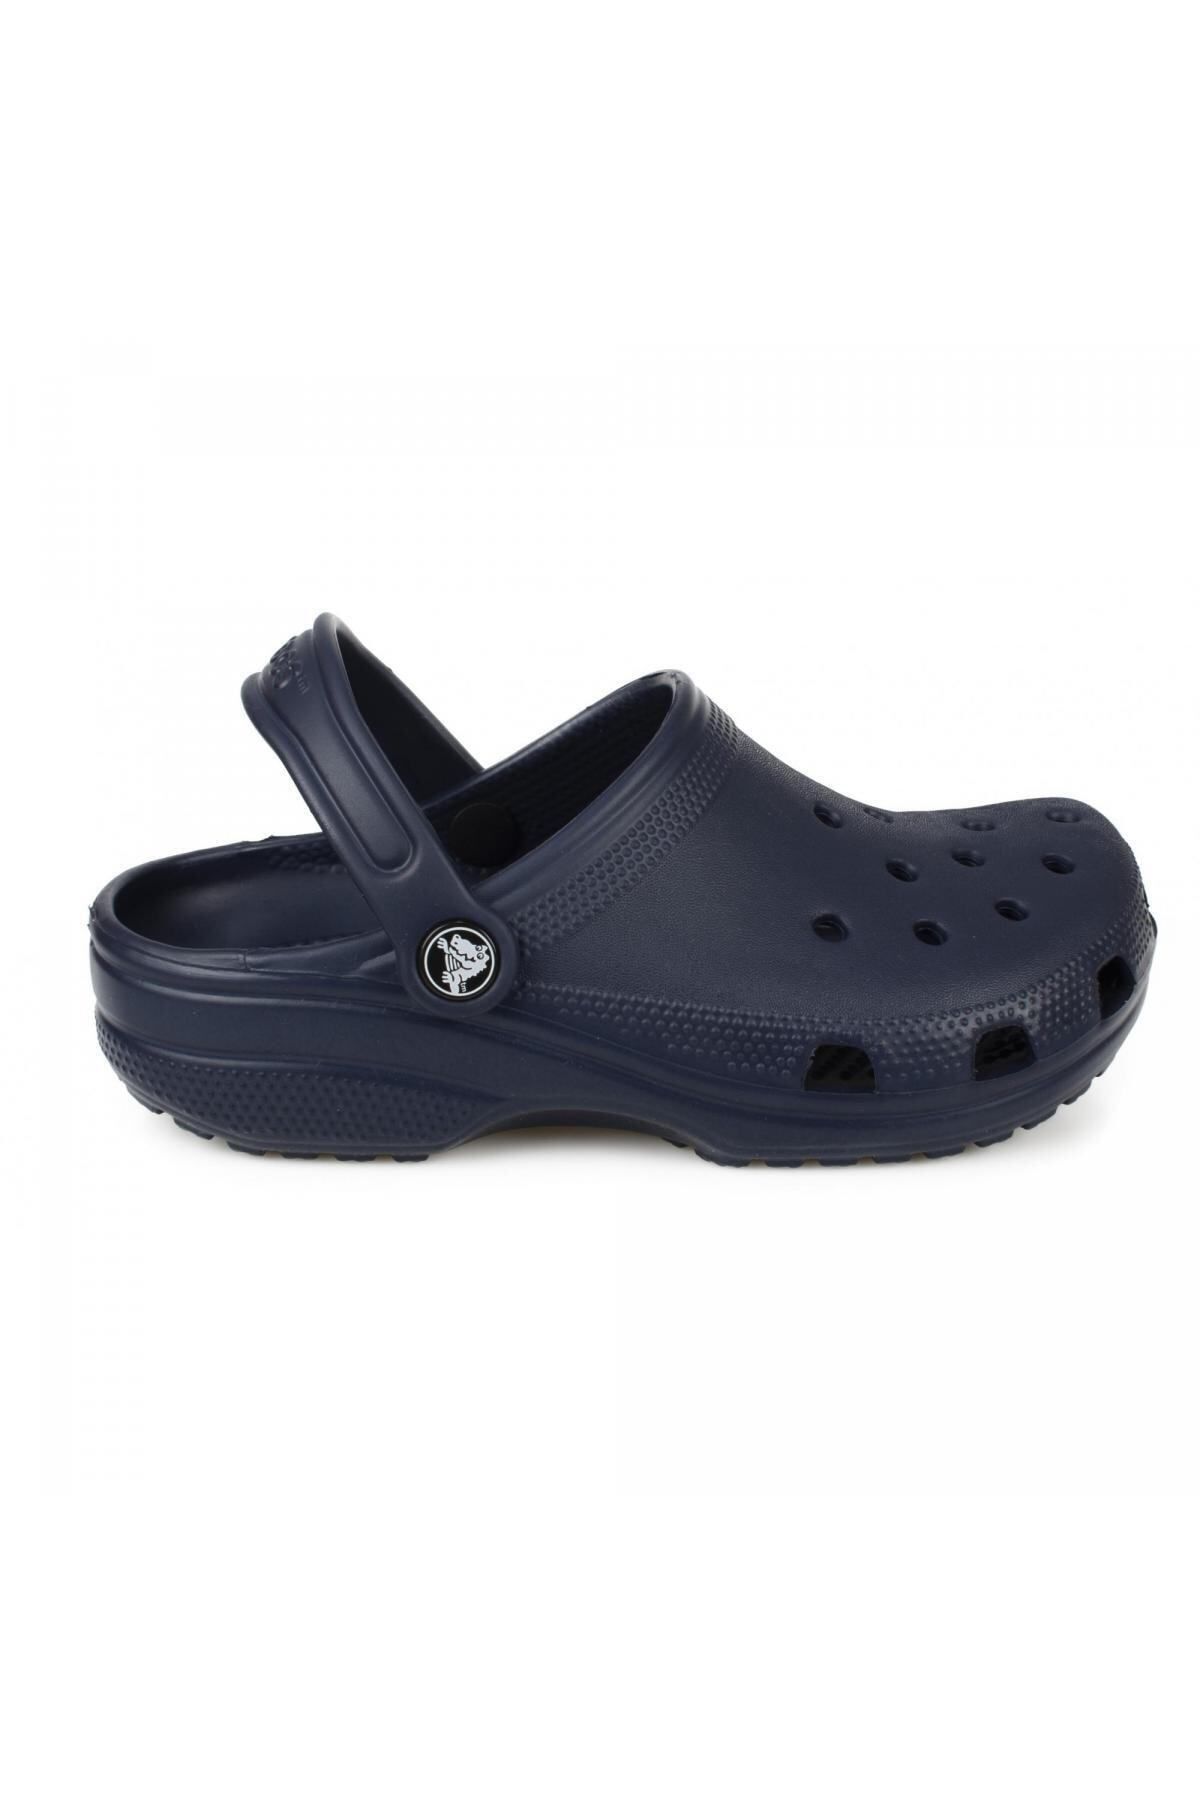 Crocs 206990 K Classic Clog T Navy Blue Children